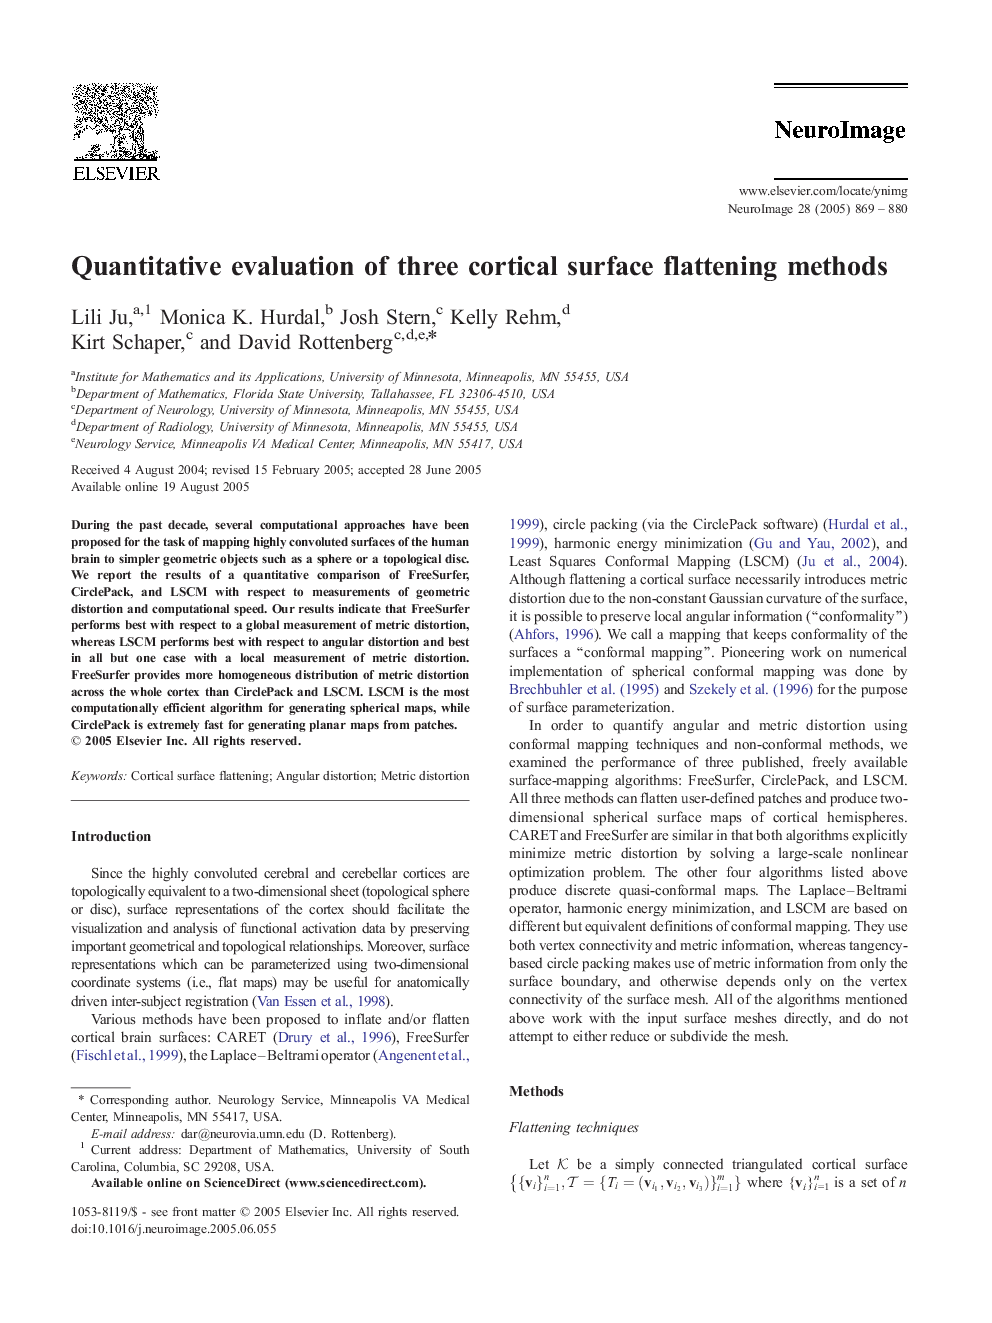 Quantitative evaluation of three cortical surface flattening methods